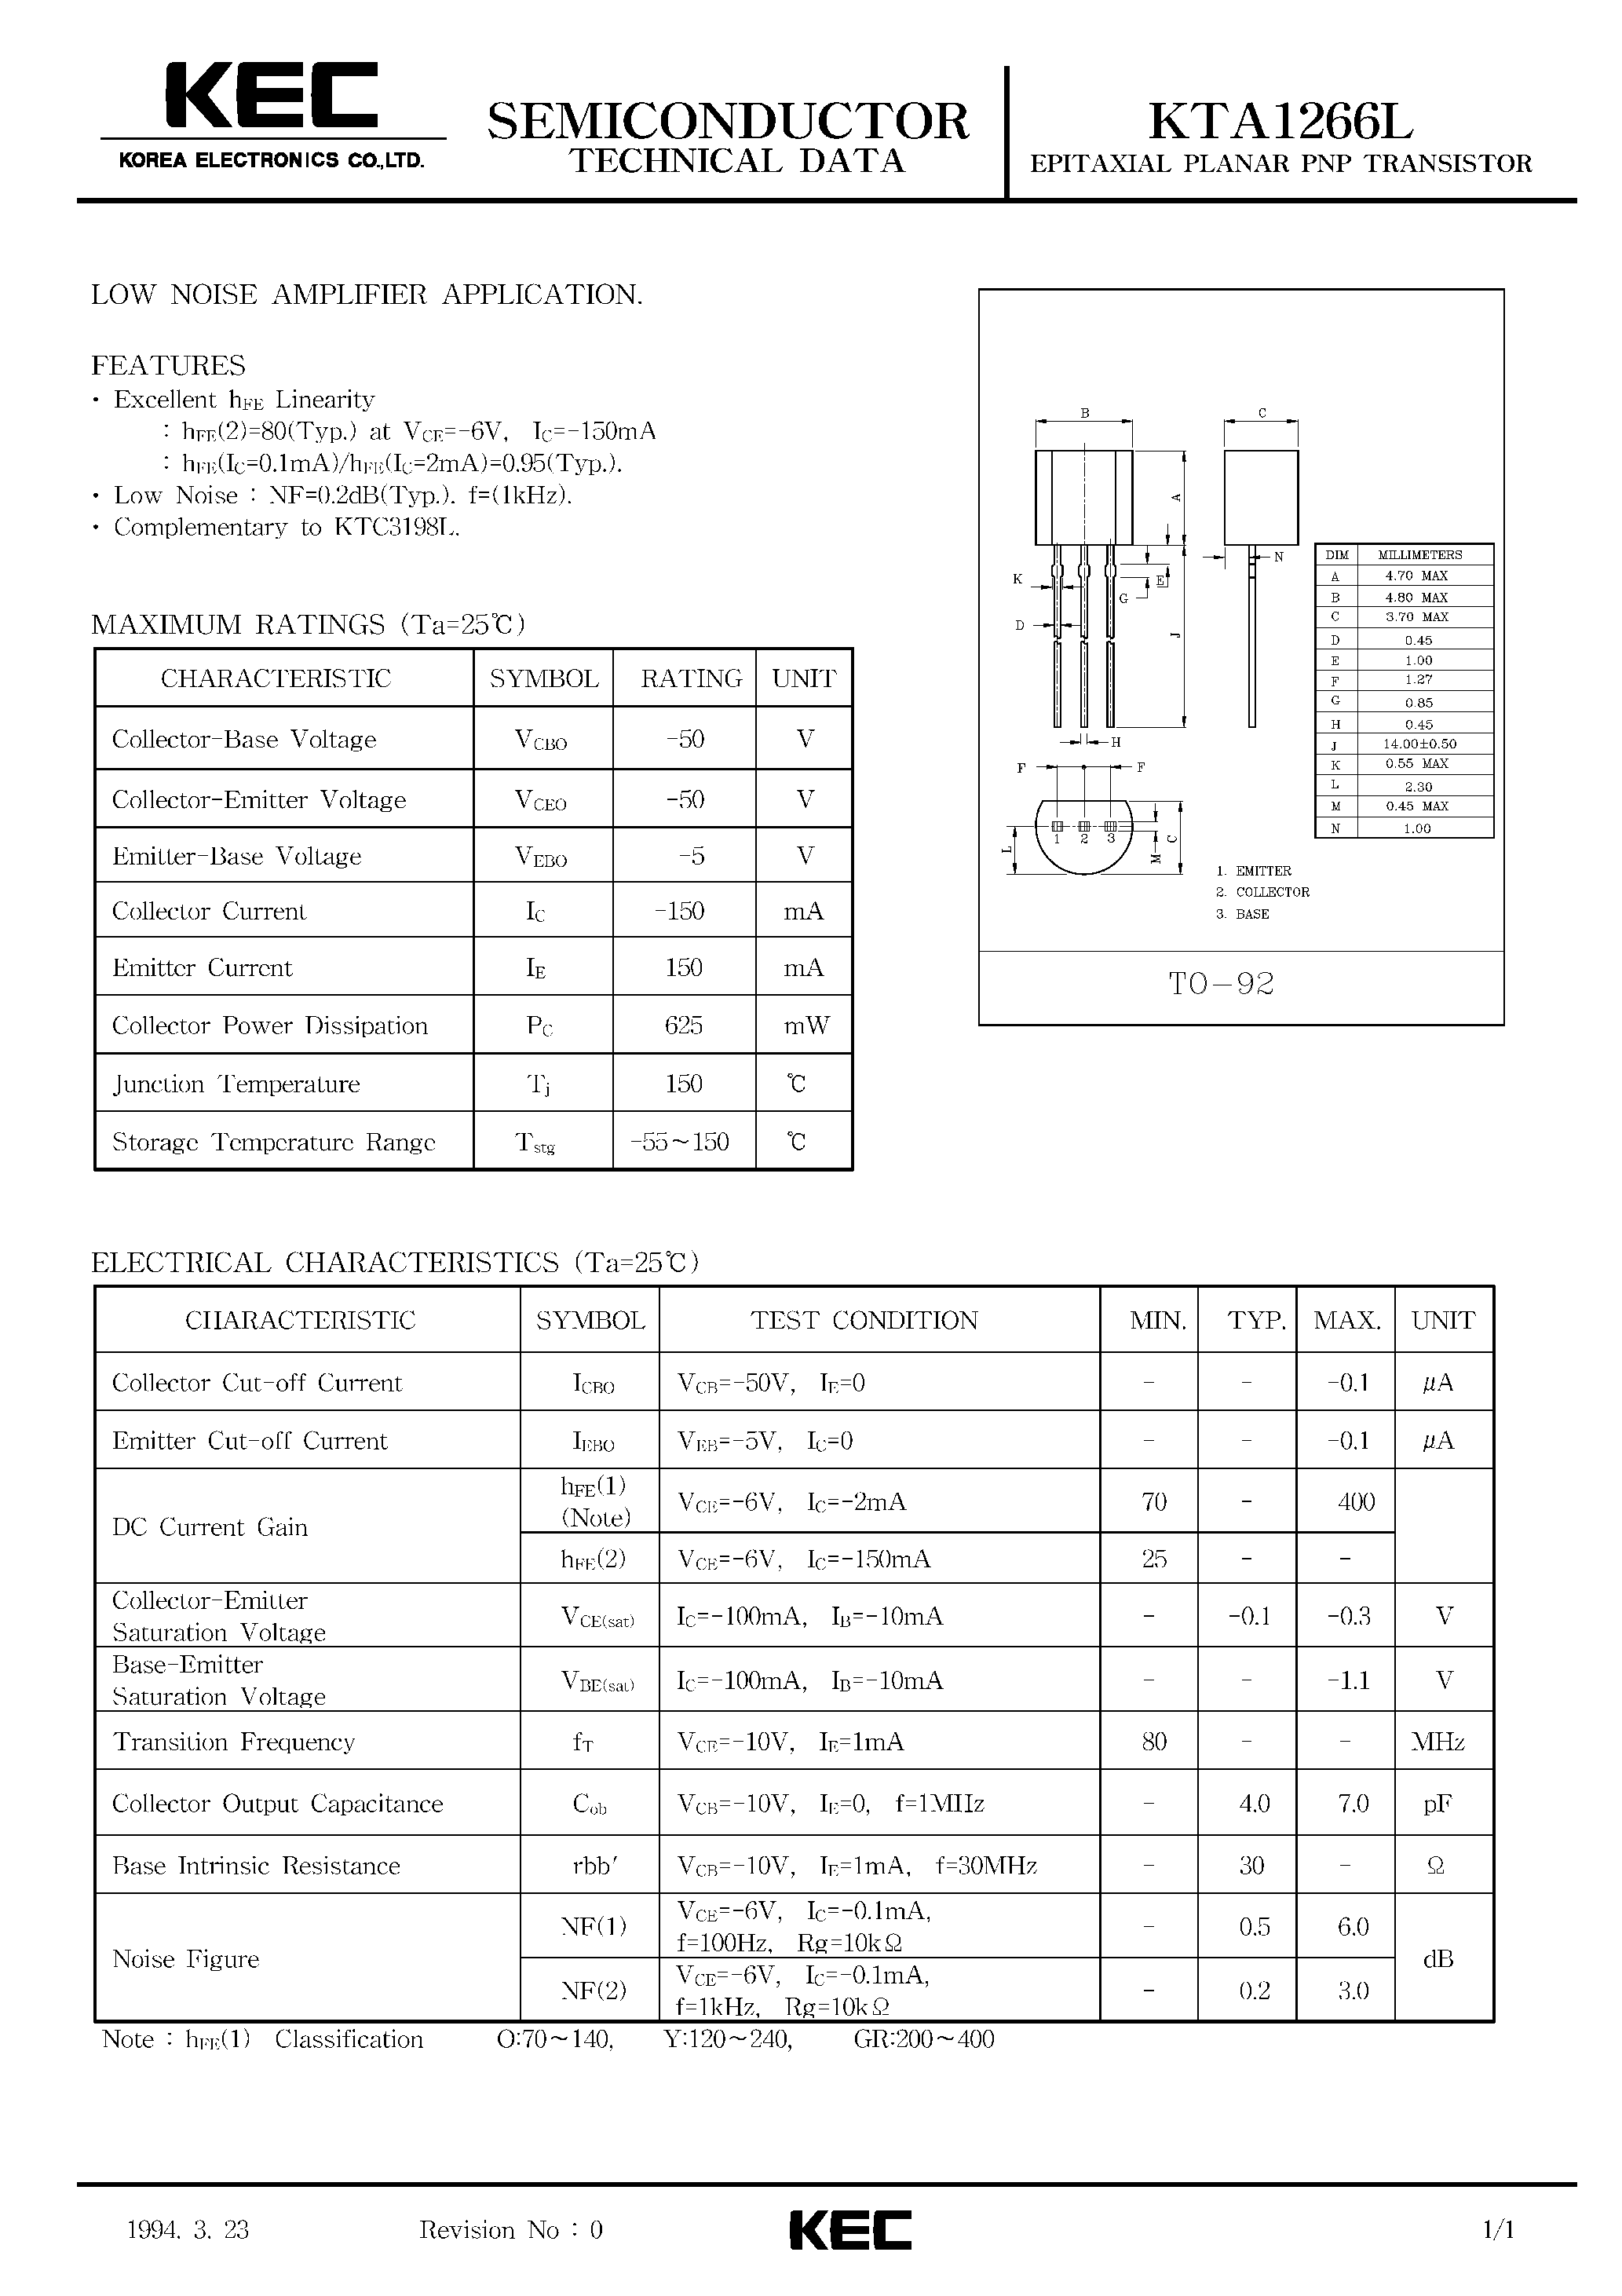 Даташит KTA1266L - EPITAXIAL PLANAR PNP TRANSISTOR (LOW NOISE AMPLIFIER) страница 1